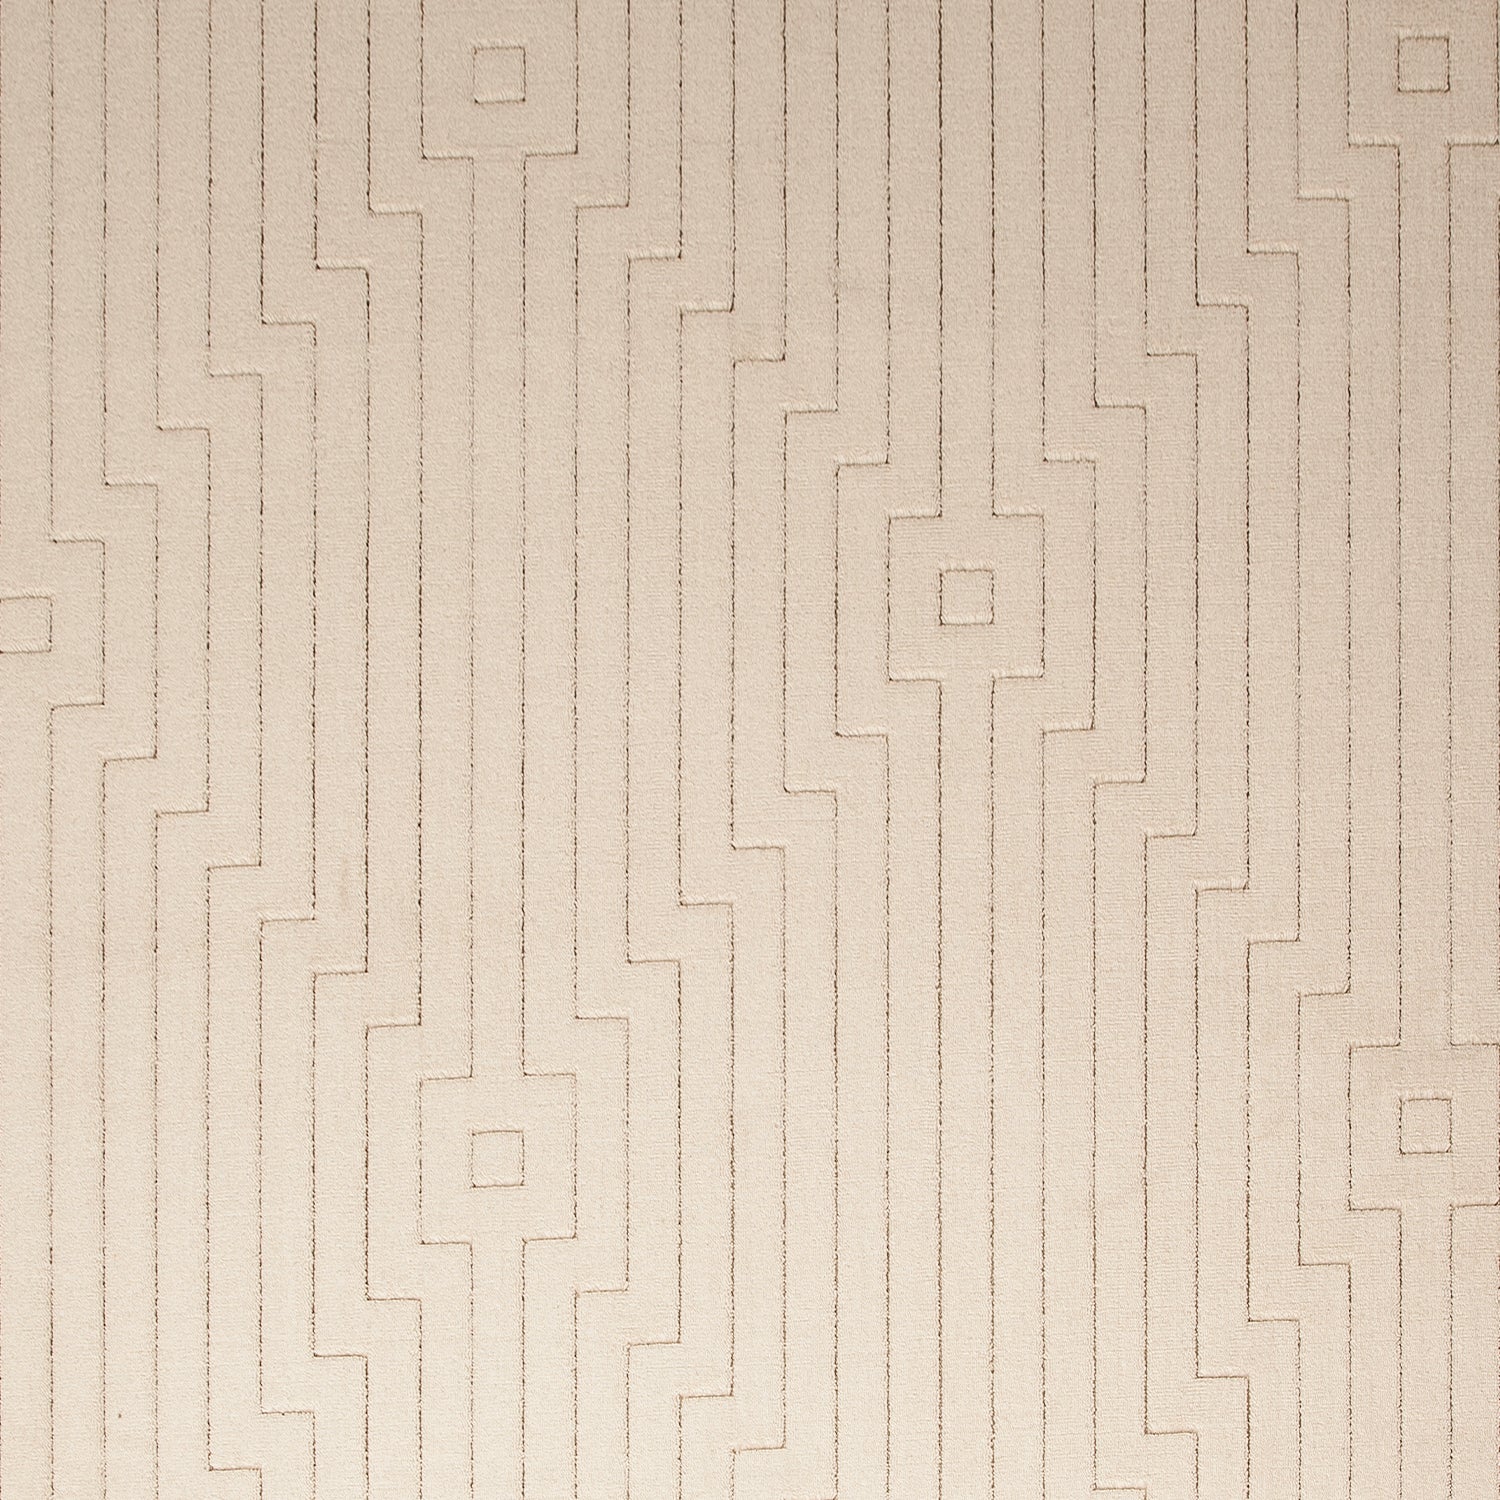 Wool-silk broadloom carpet swatch in a dimensional geometric weave in ivory.